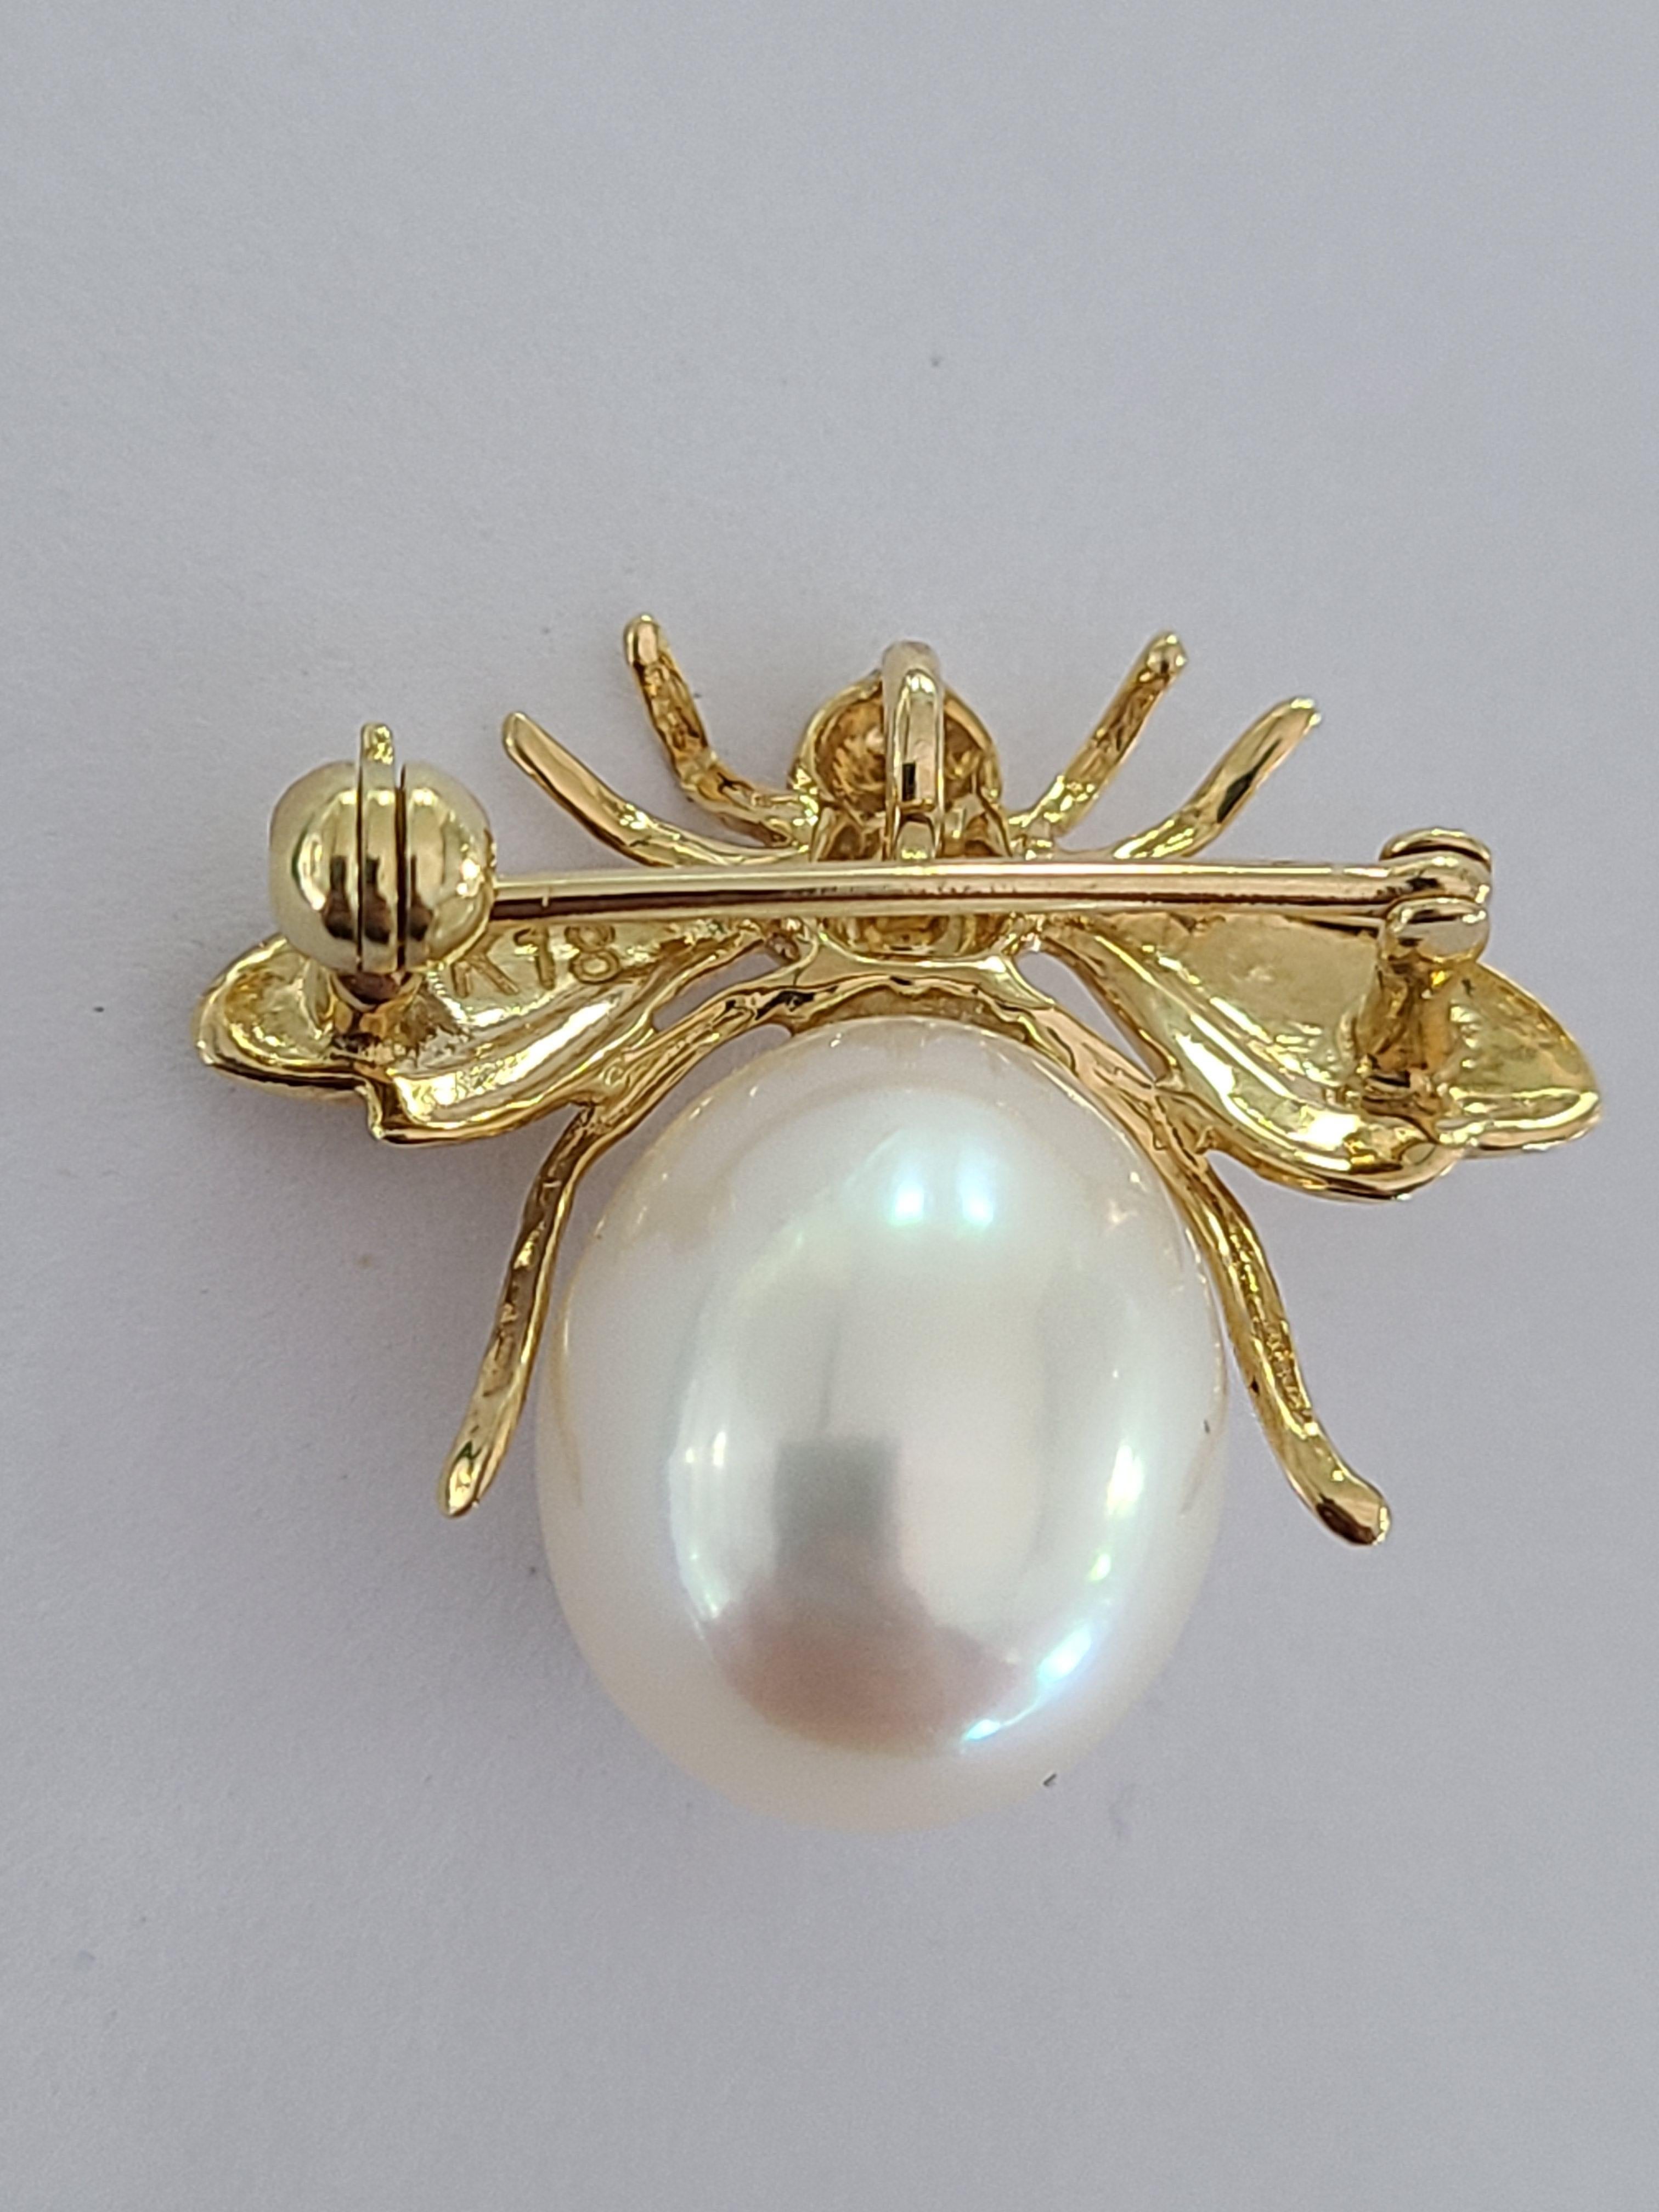 Oval Cut 9.9 Carat Pearl Pendant/Brooch in 18 Karat Gold